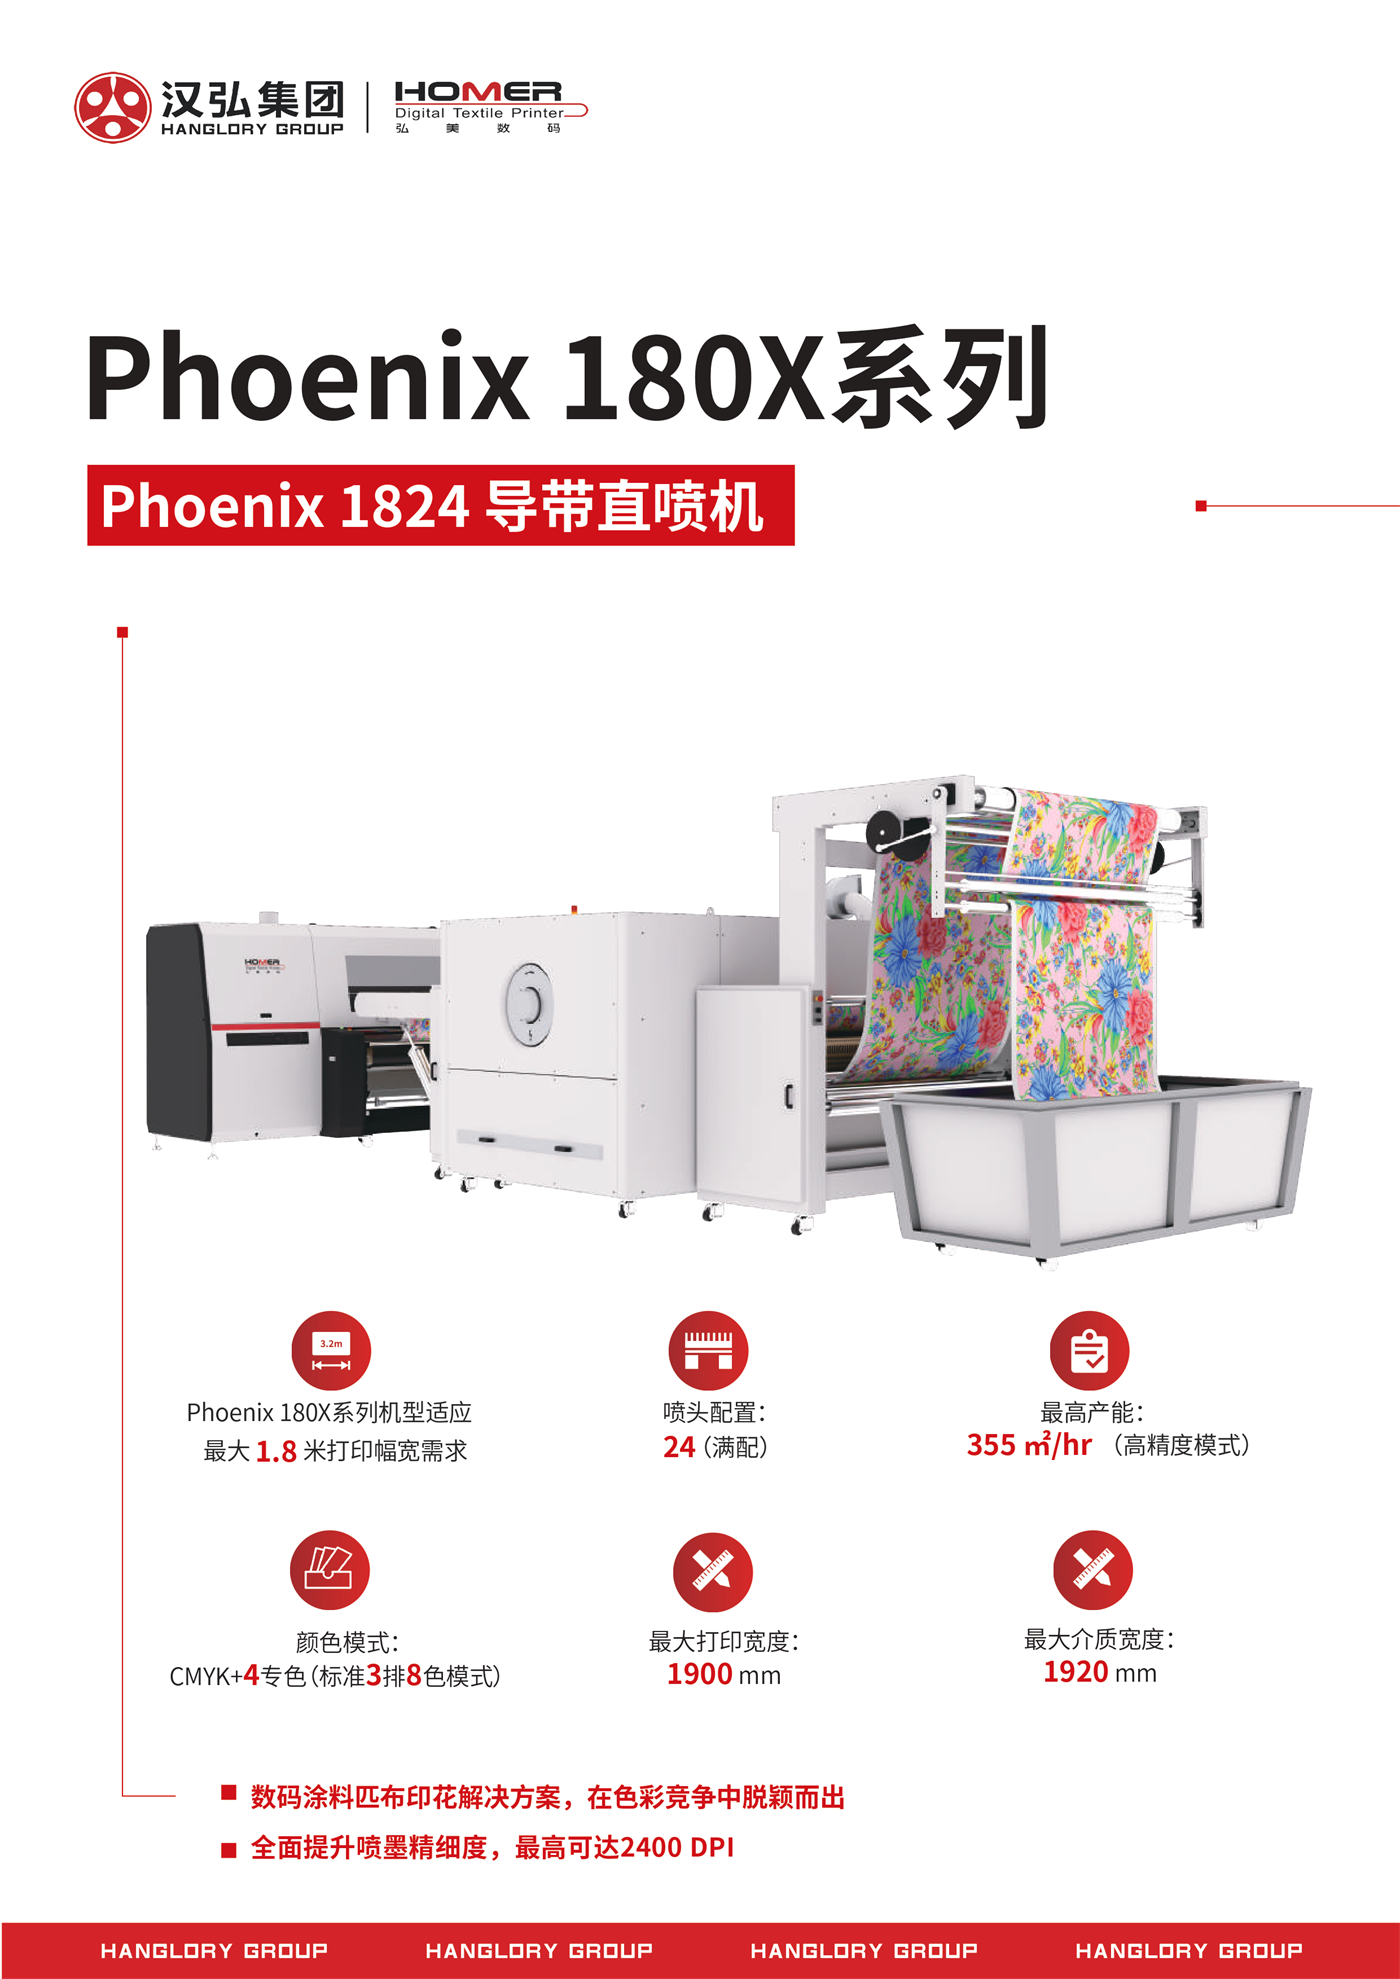 Phoenix 180X (图1)